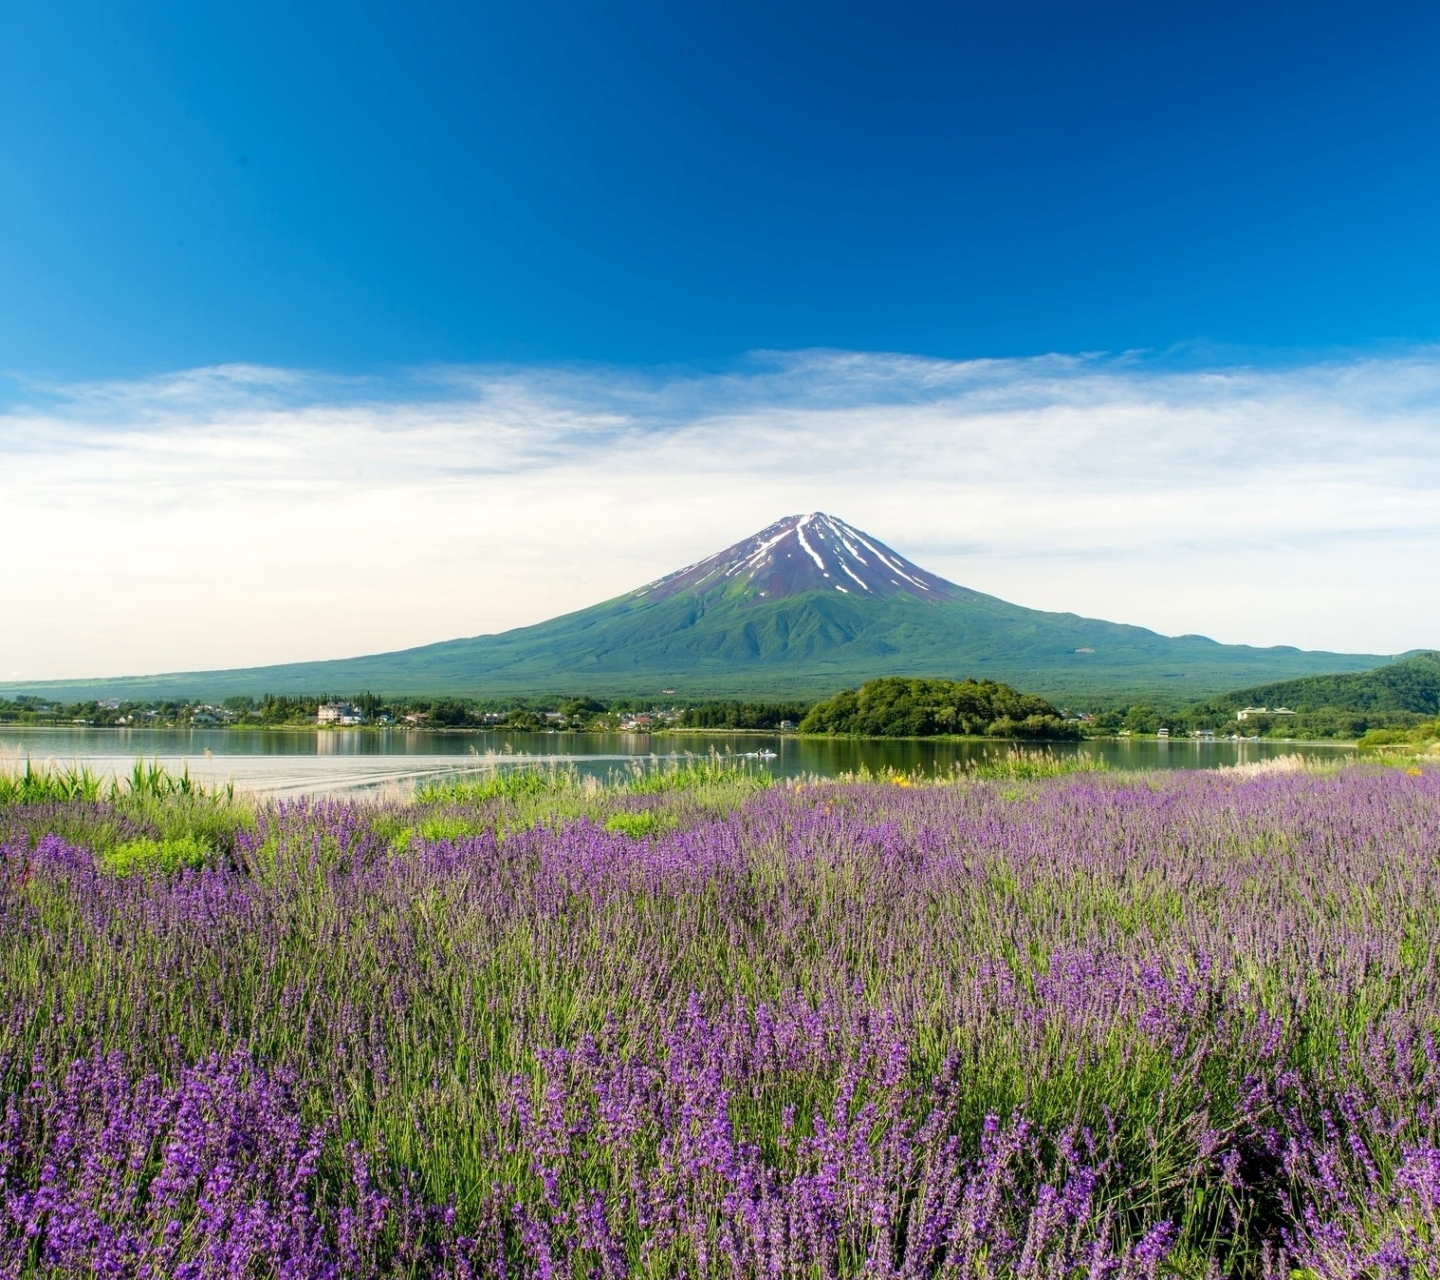 PCデスクトップに地球, 日本, 火山, 富士山画像を無料でダウンロード